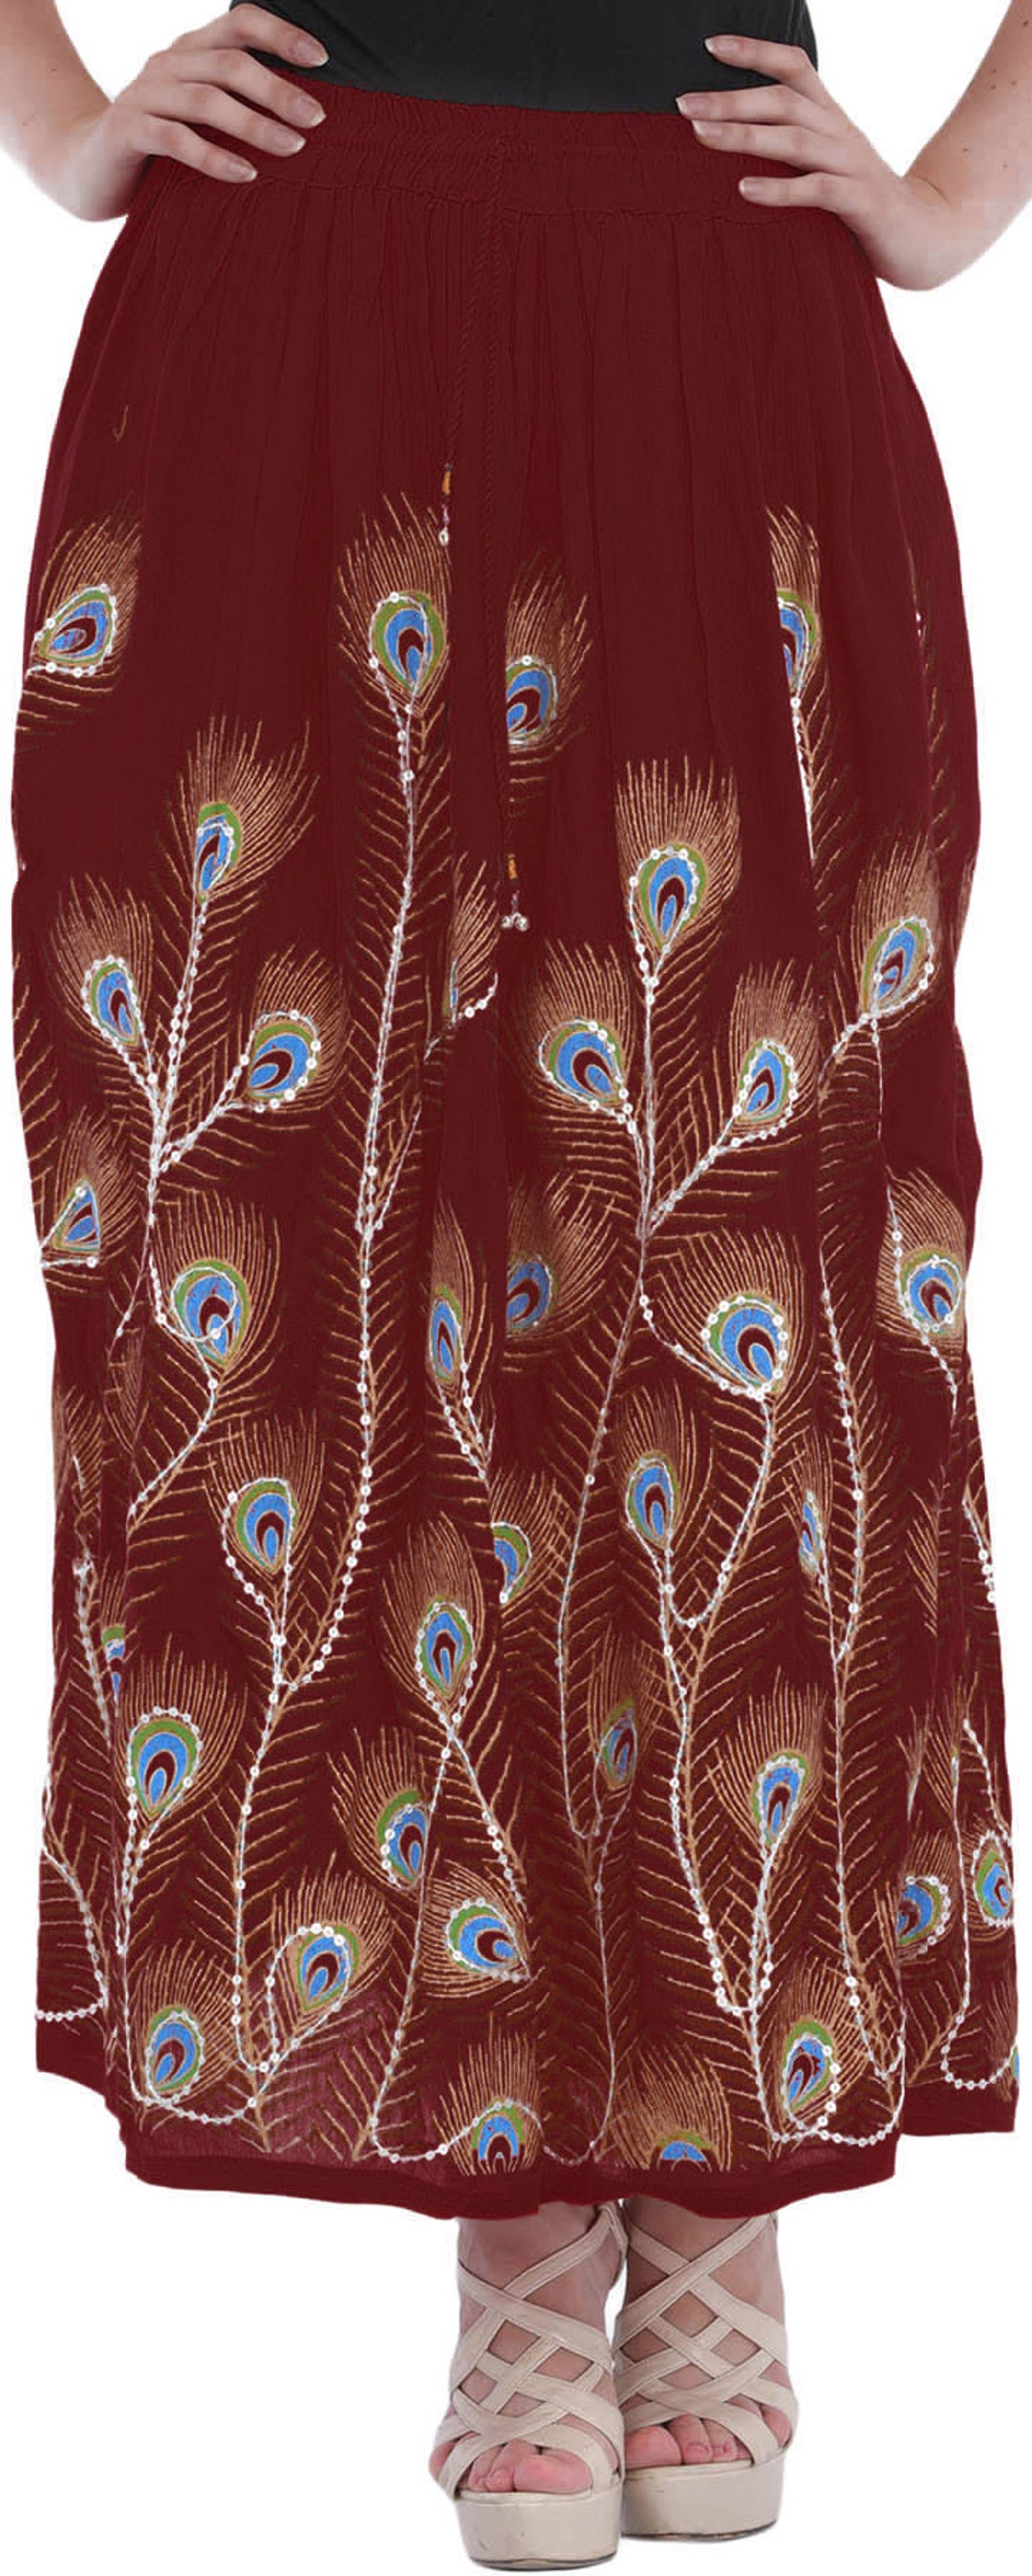 The peacock skirt by Aubrey Beardsley (1893) - Wall Art, Hanging Wall  Decor, Home Decor - BestOfBharat